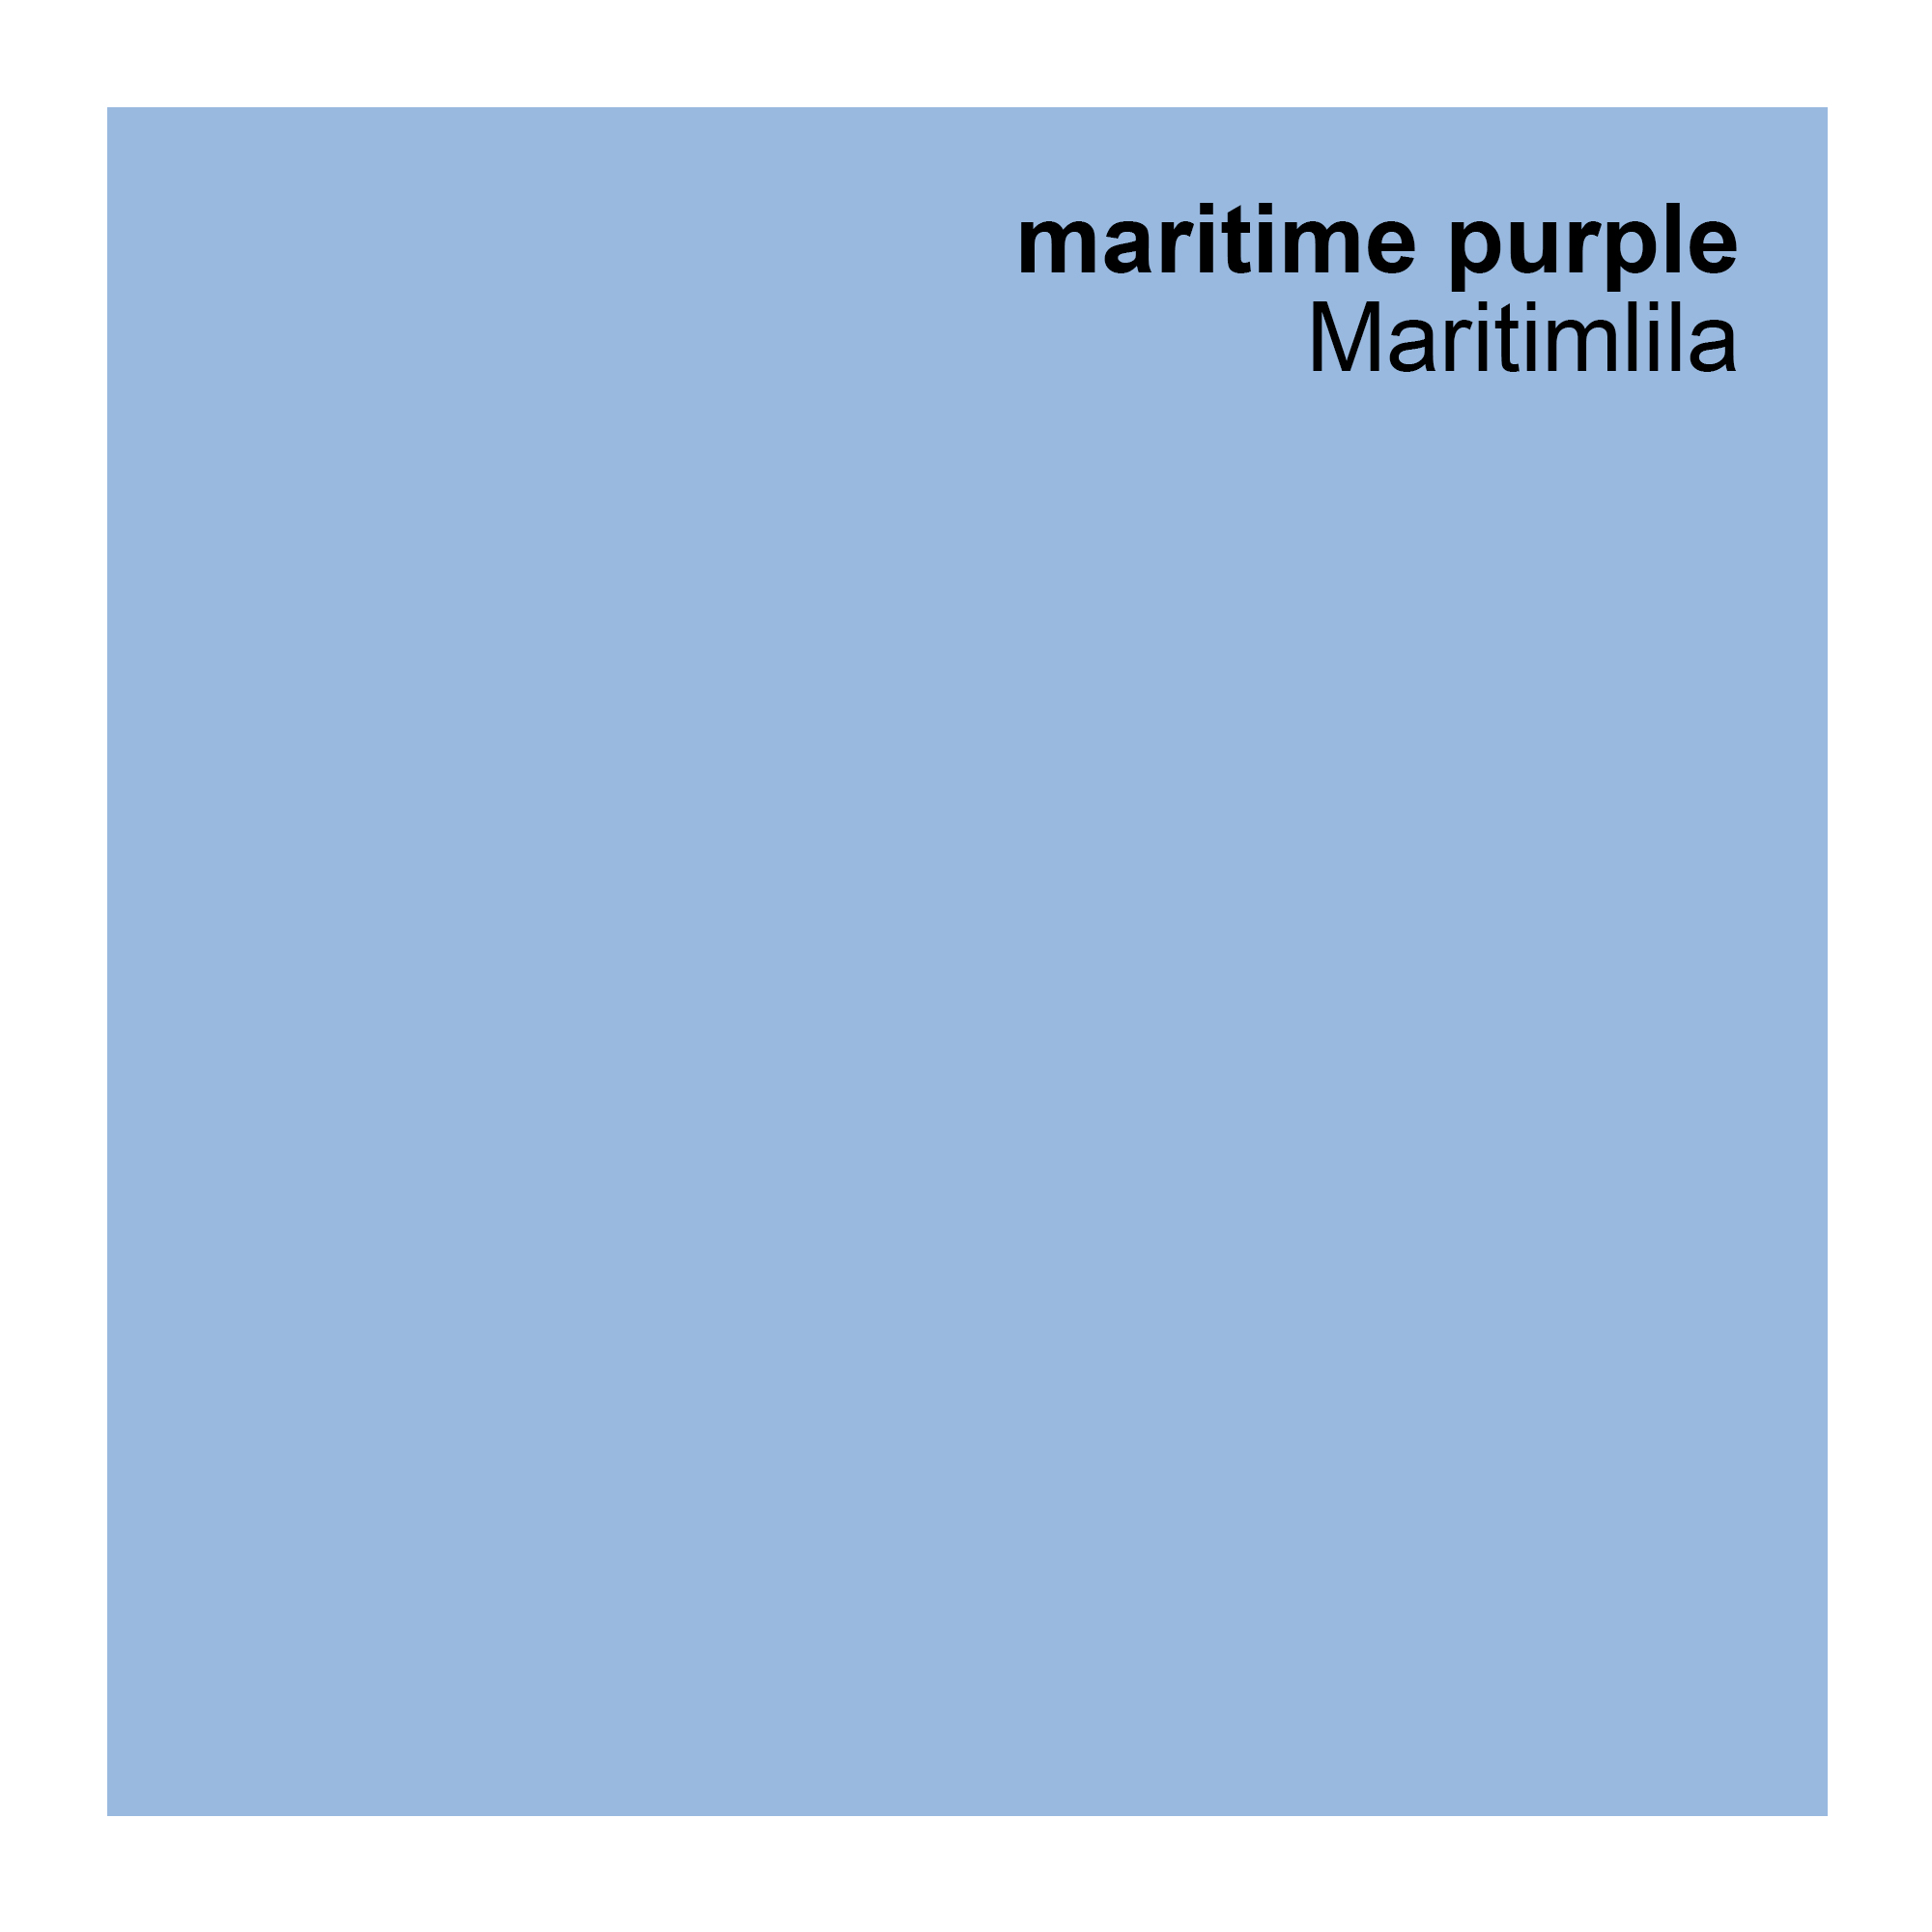 preismaxx Mattlatex urban colors, bunte Wandfarbe, lila, maritimlila, maritime purple 2,5L